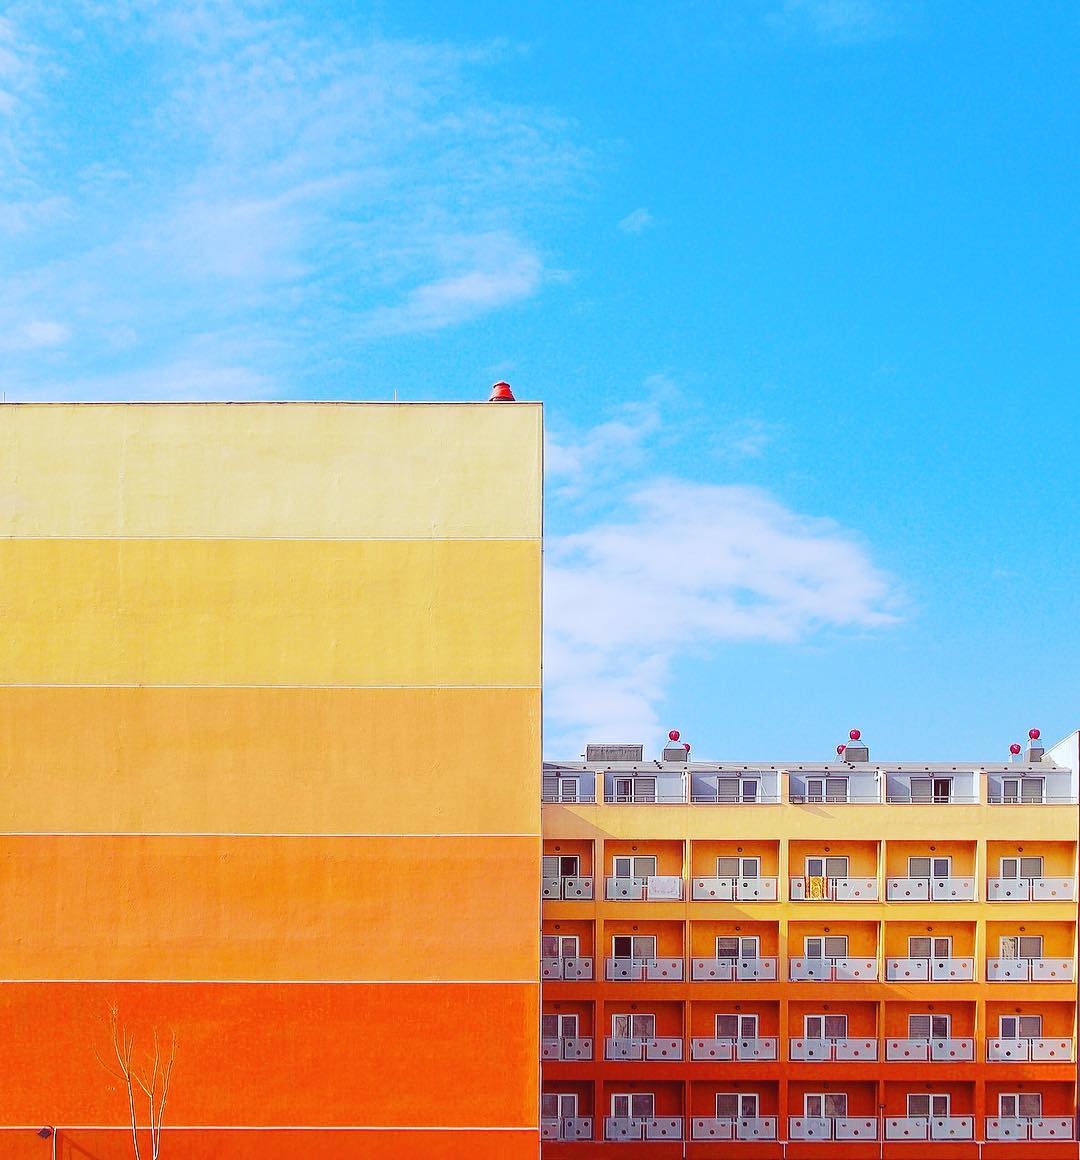 Turkish Photographer Yener Torun Beautifully Captured The Colorful Neighborhoods Of Istanbul